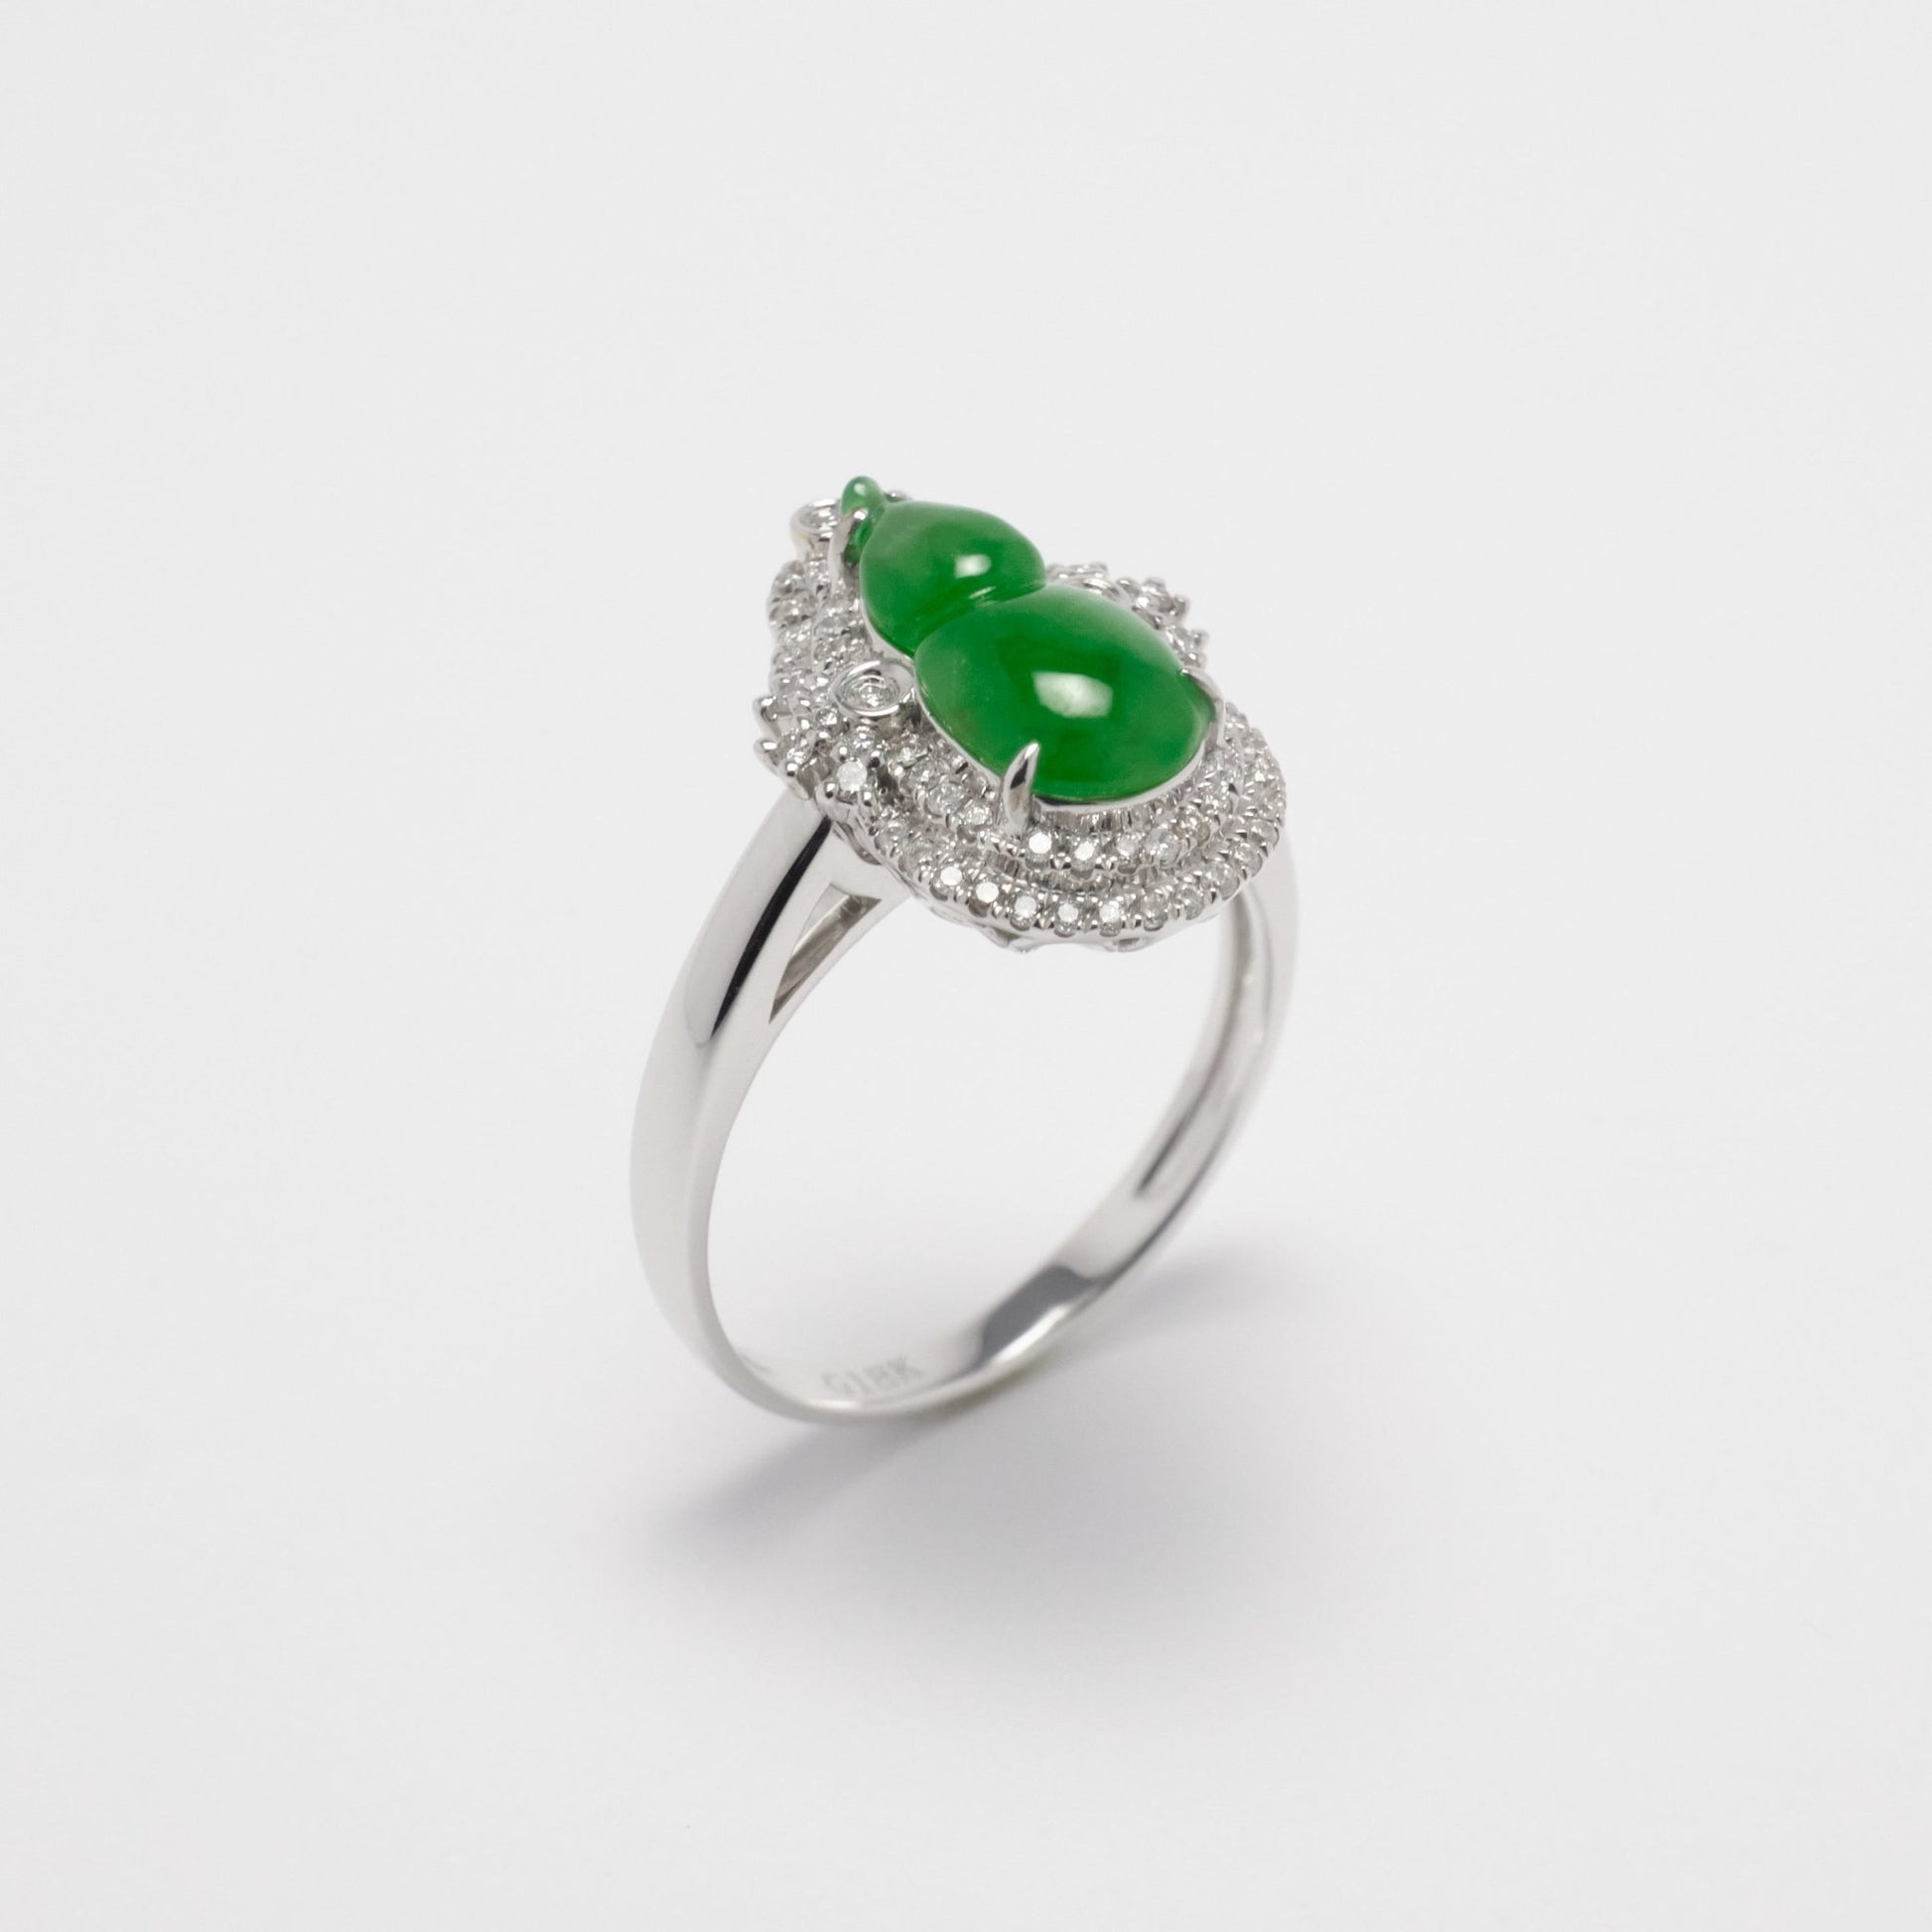 Ring - 18K白金緬甸老坑鮮綠葫蘆形天然翡翠配鑽石吊墜兩用戒指 - 雅玉珠寶